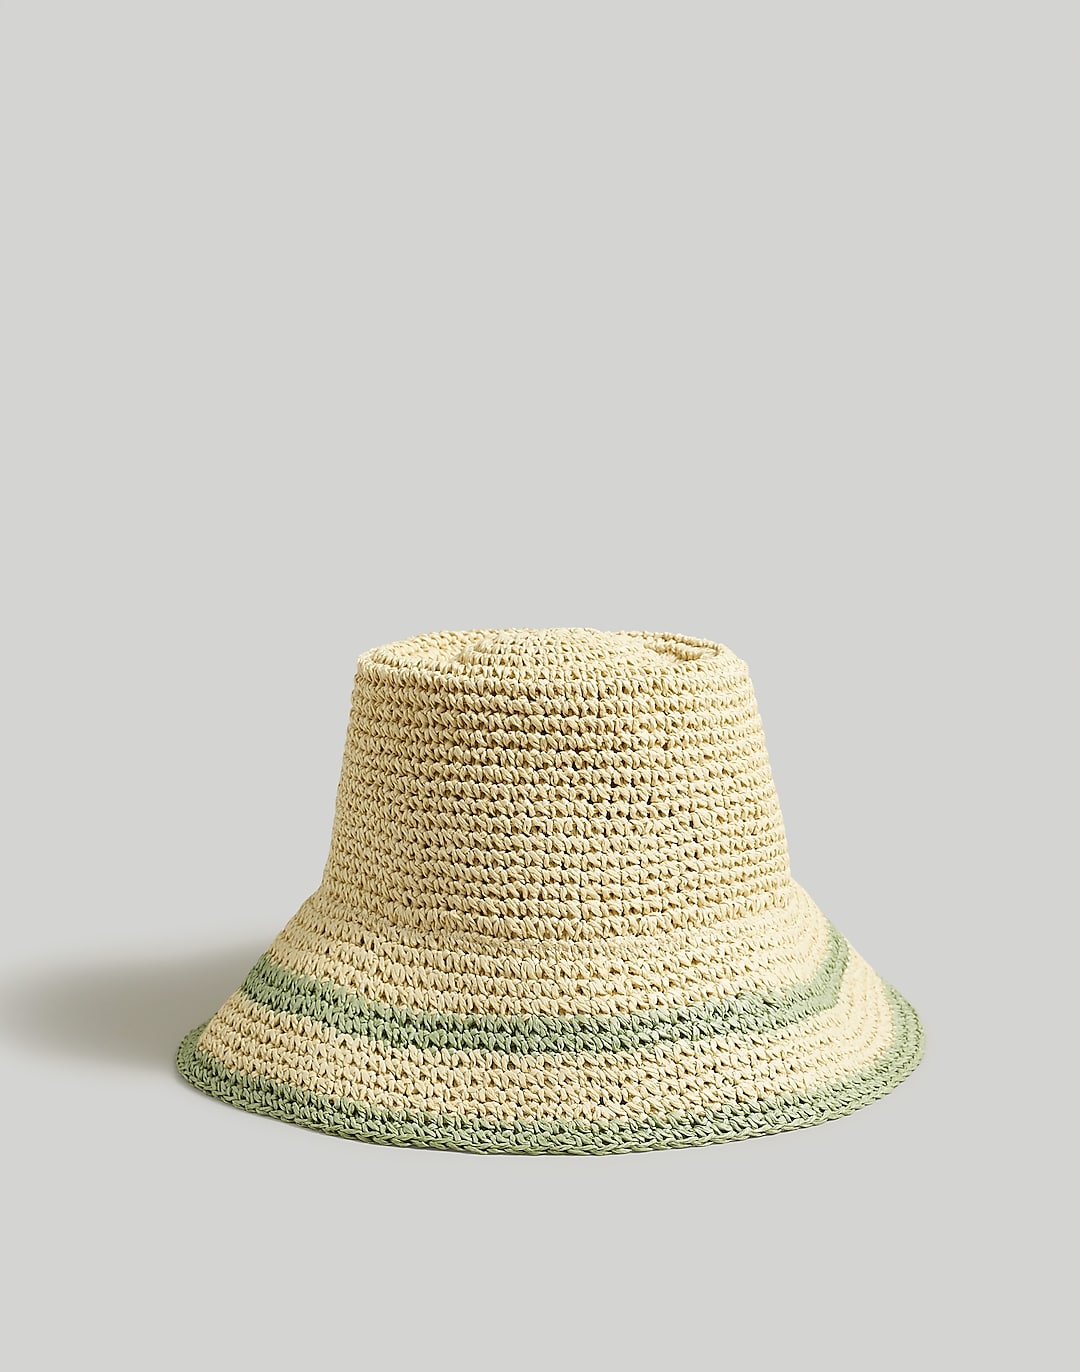 Lantern Straw Hat | Madewell